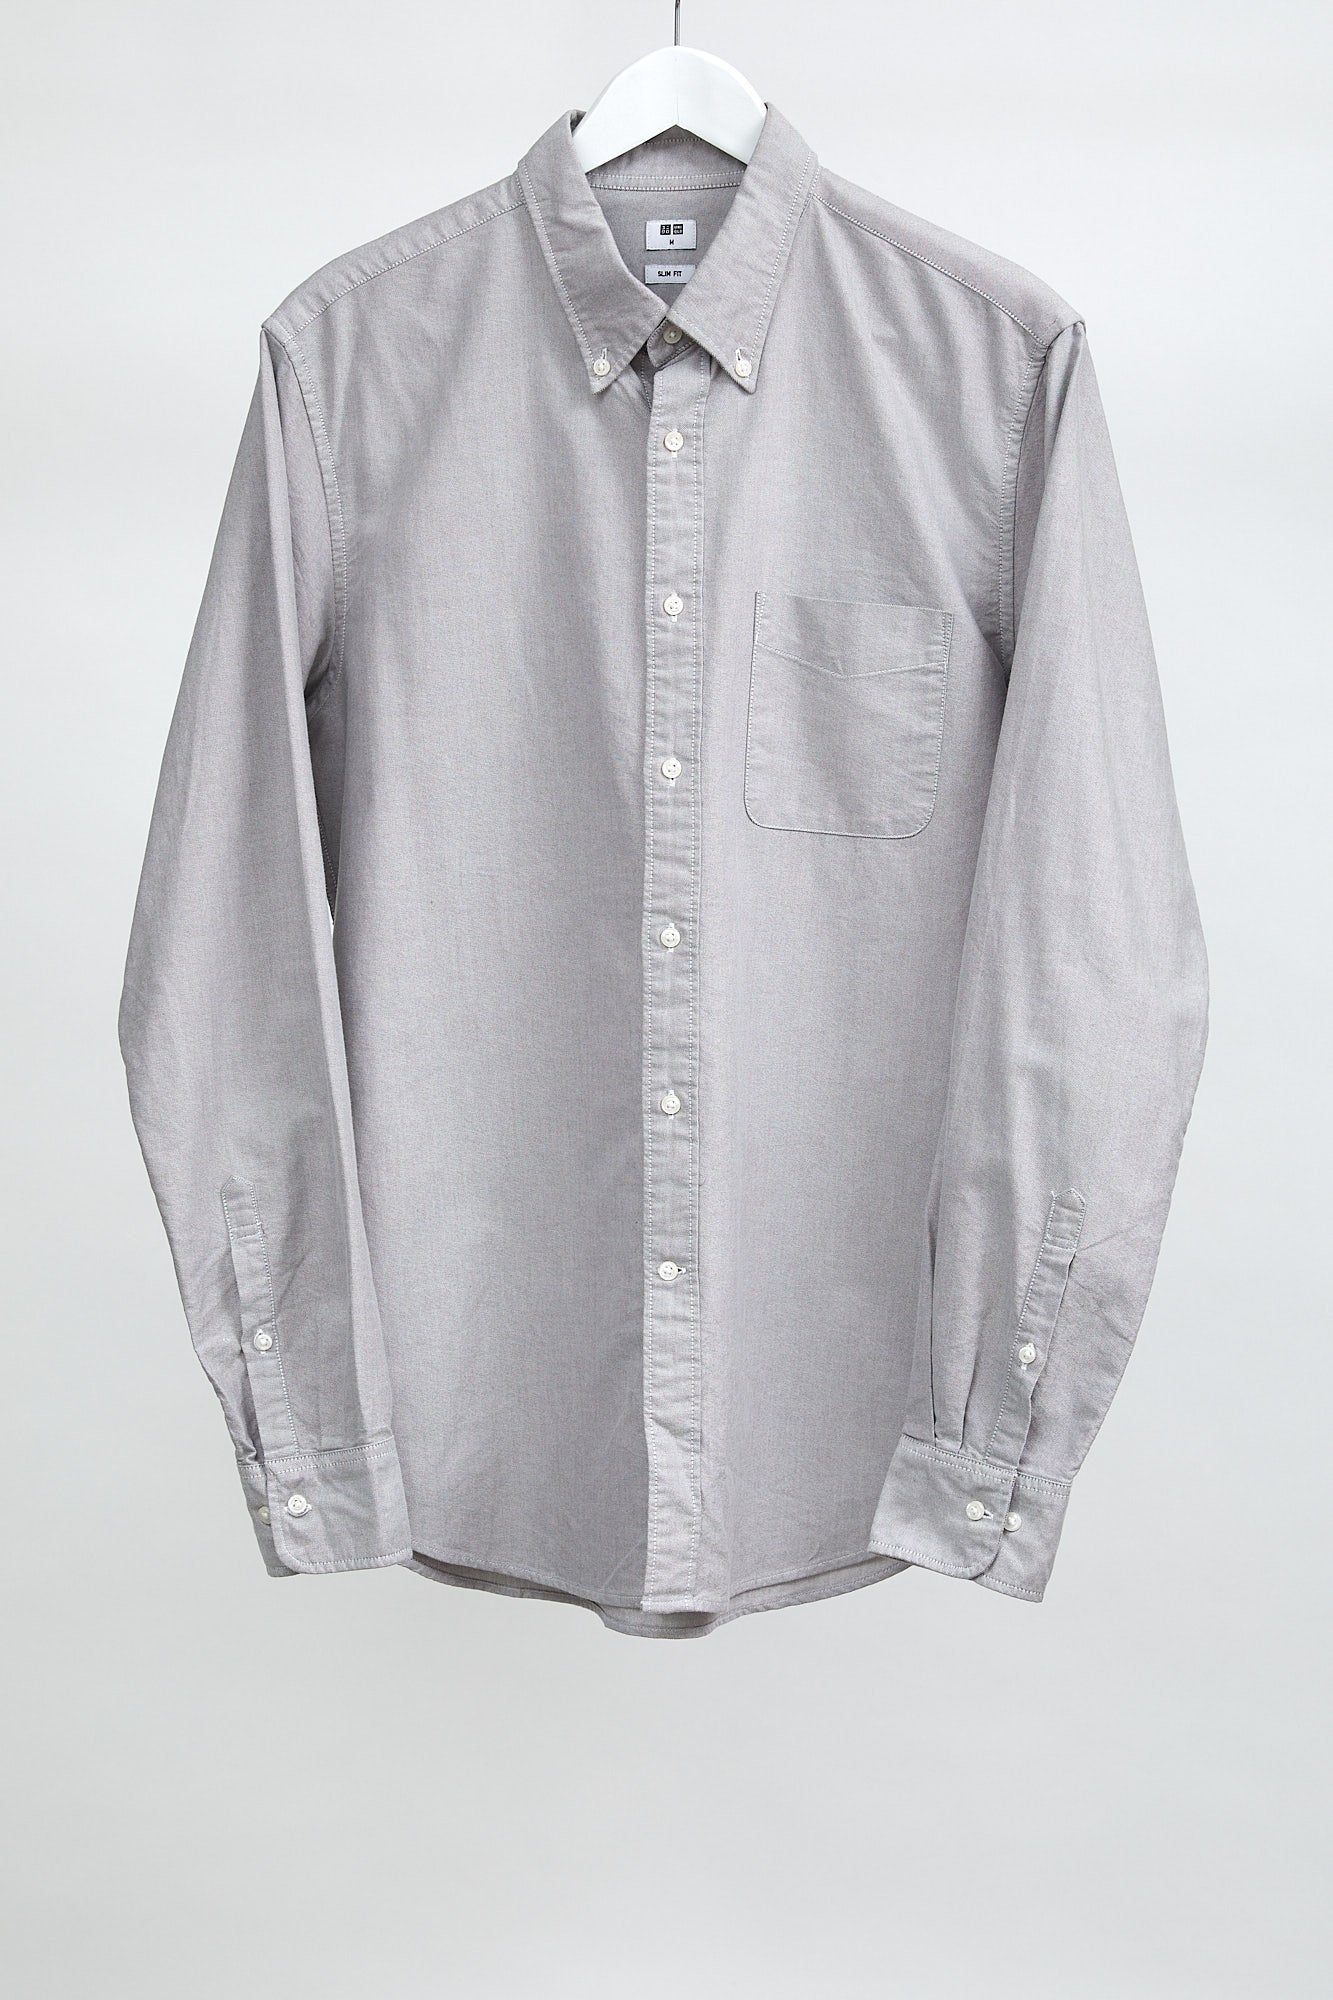 Mens Grey Uniqlo Oxford Shirt: Size Medium